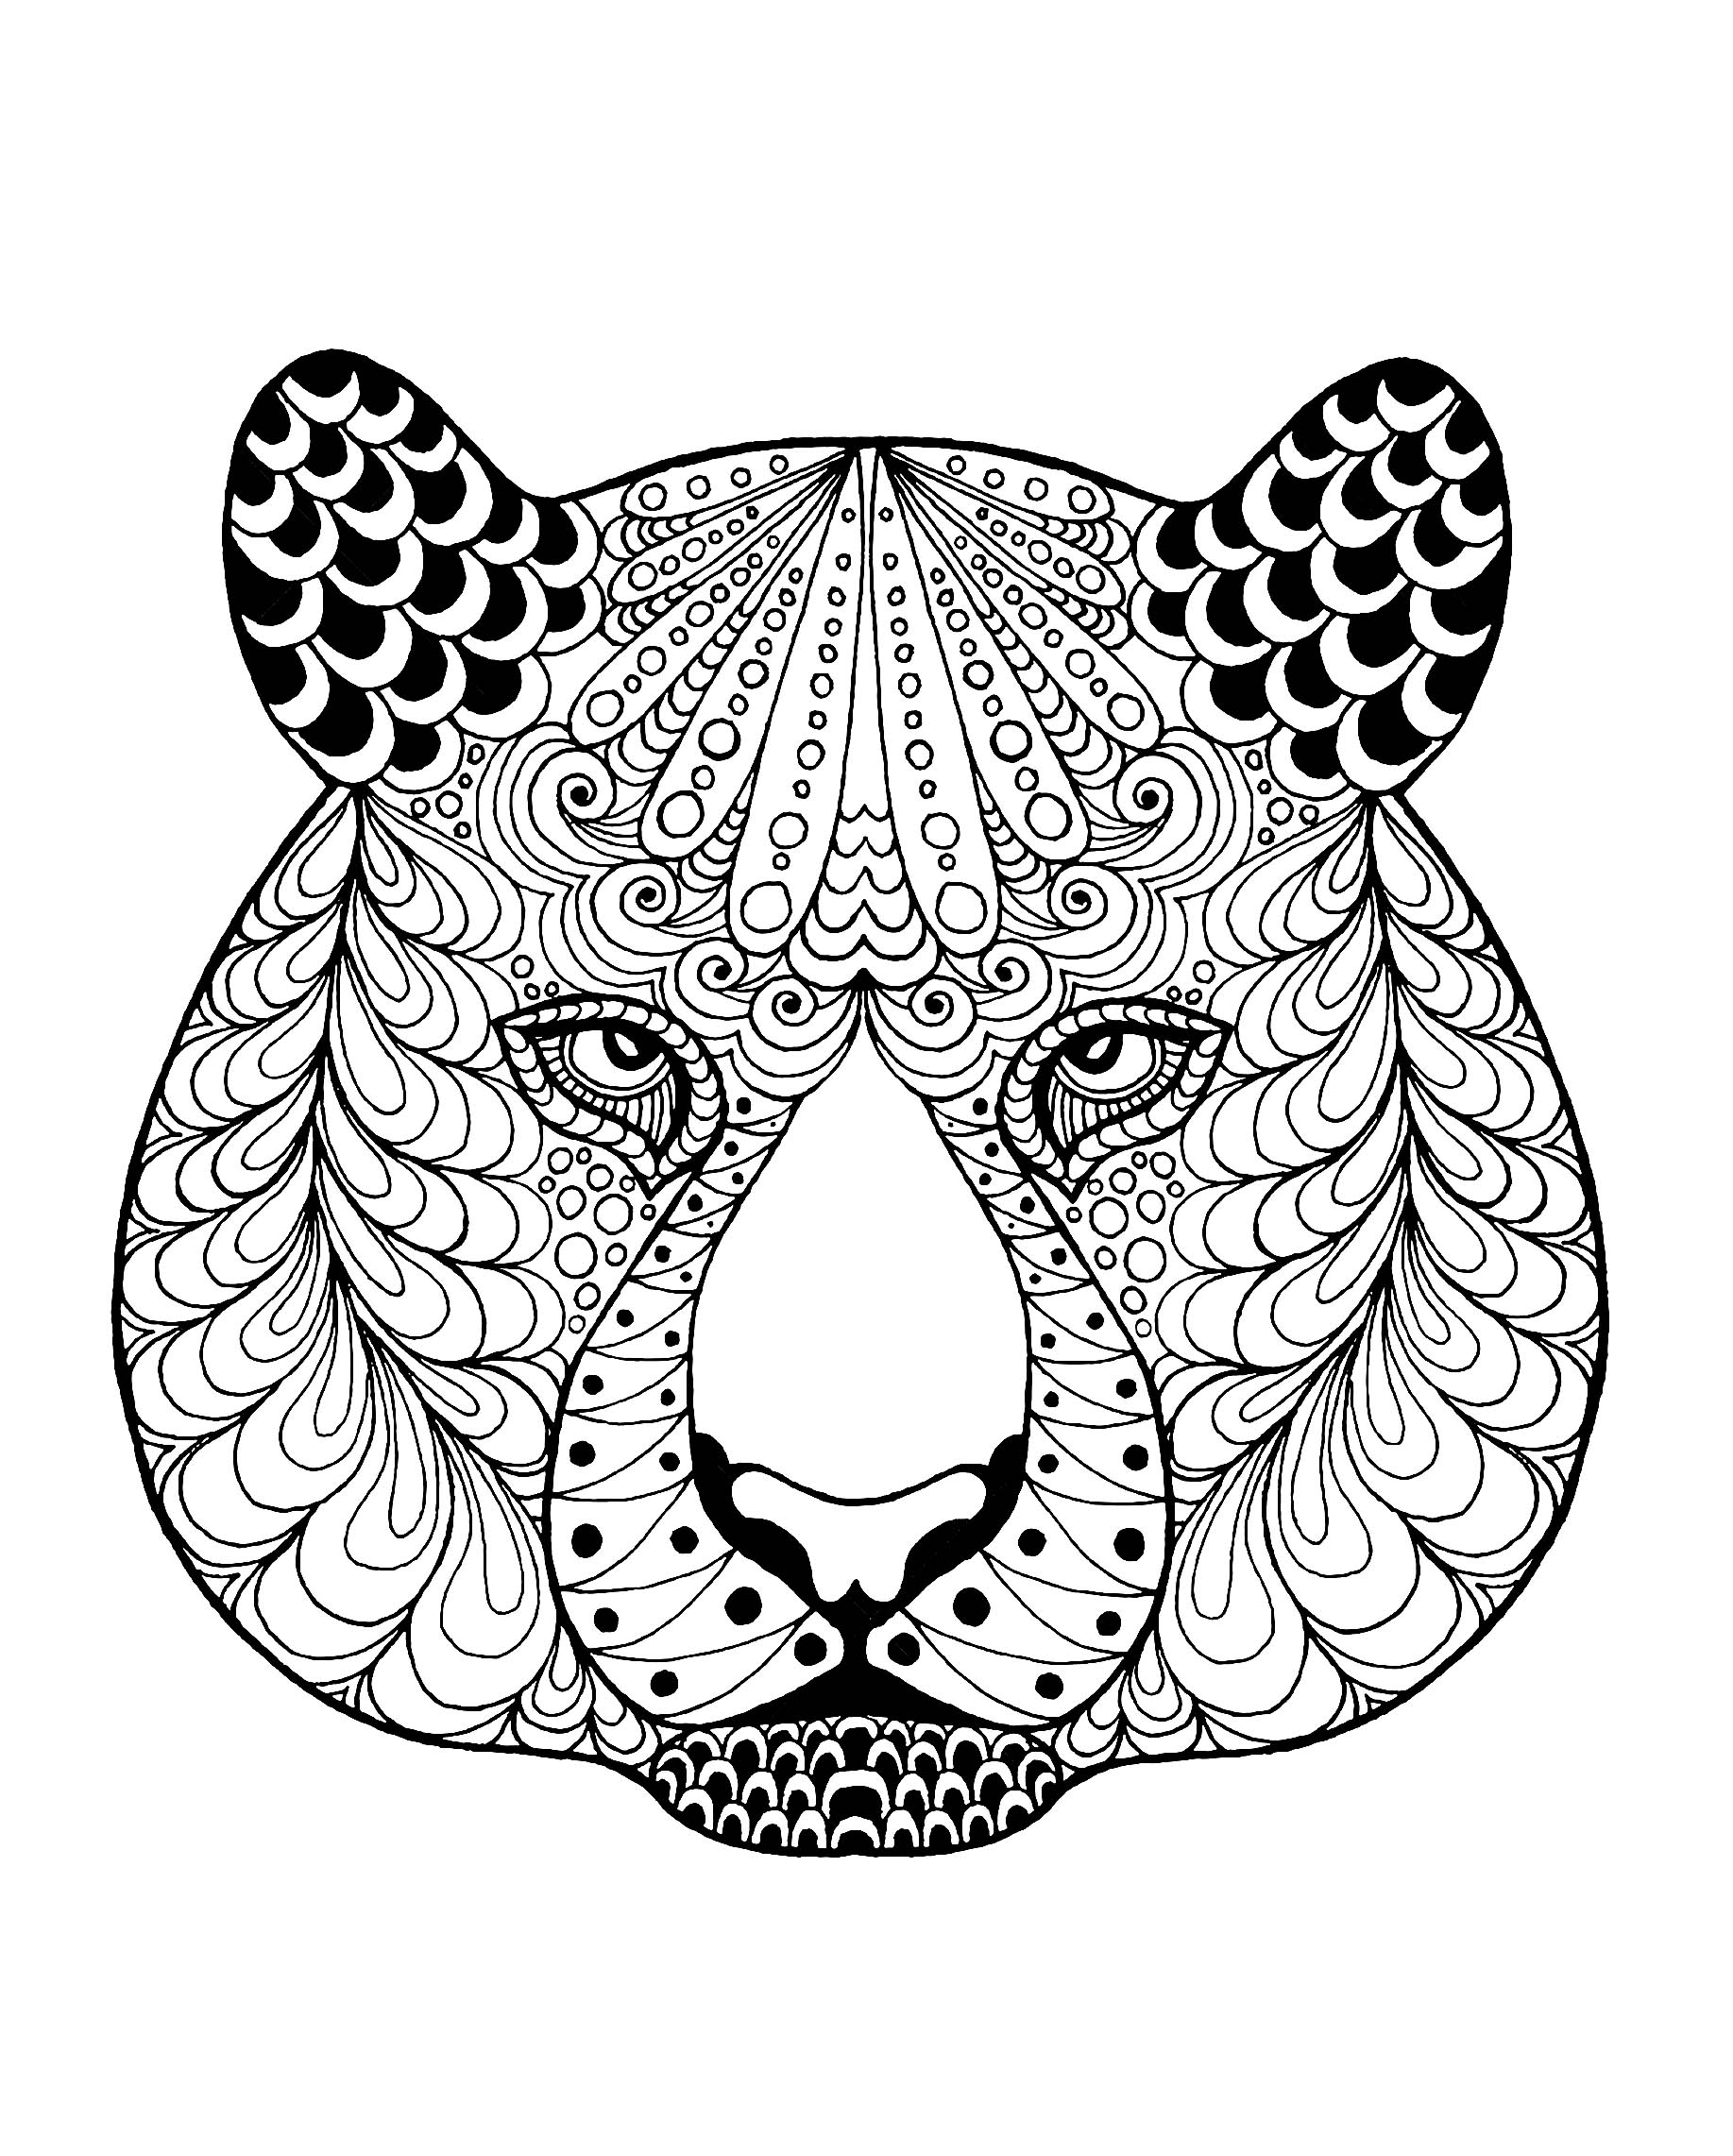 Desenhos incríveis para colorir de Tigres para imprimir e colorir, Artista : Safiullina   Fonte : 123rf